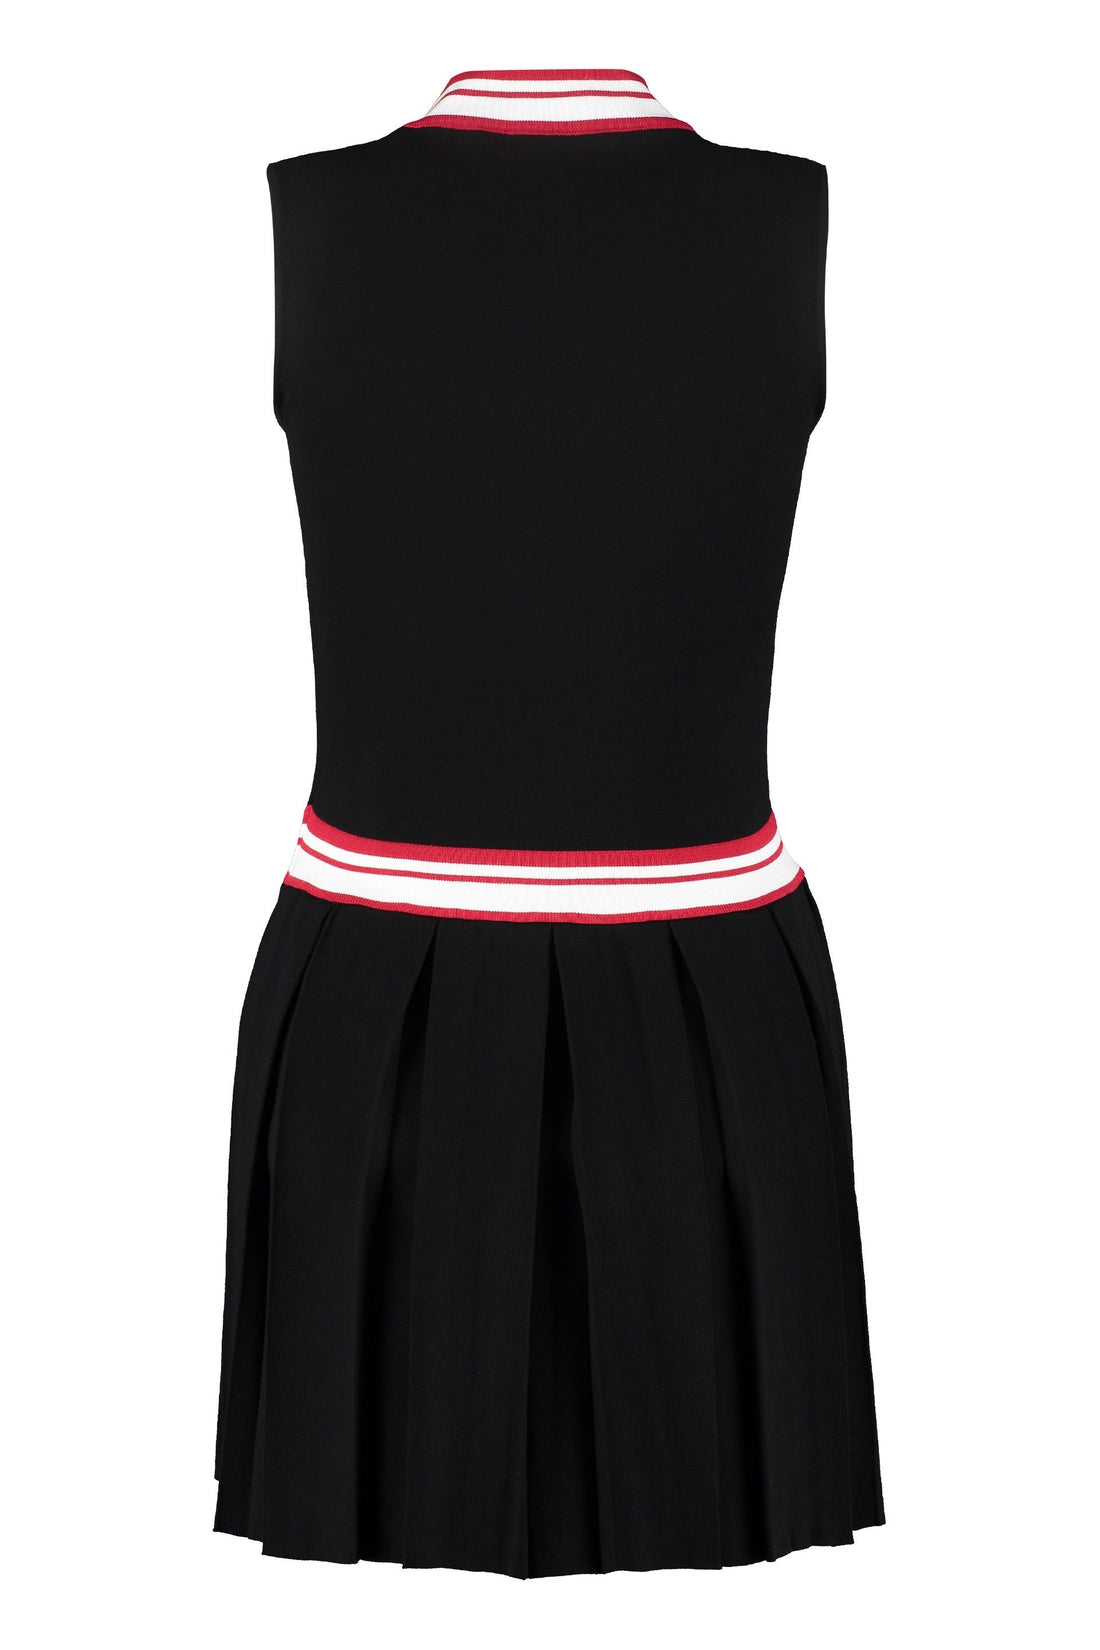 GCDS-OUTLET-SALE-Pleated skirt dress-ARCHIVIST